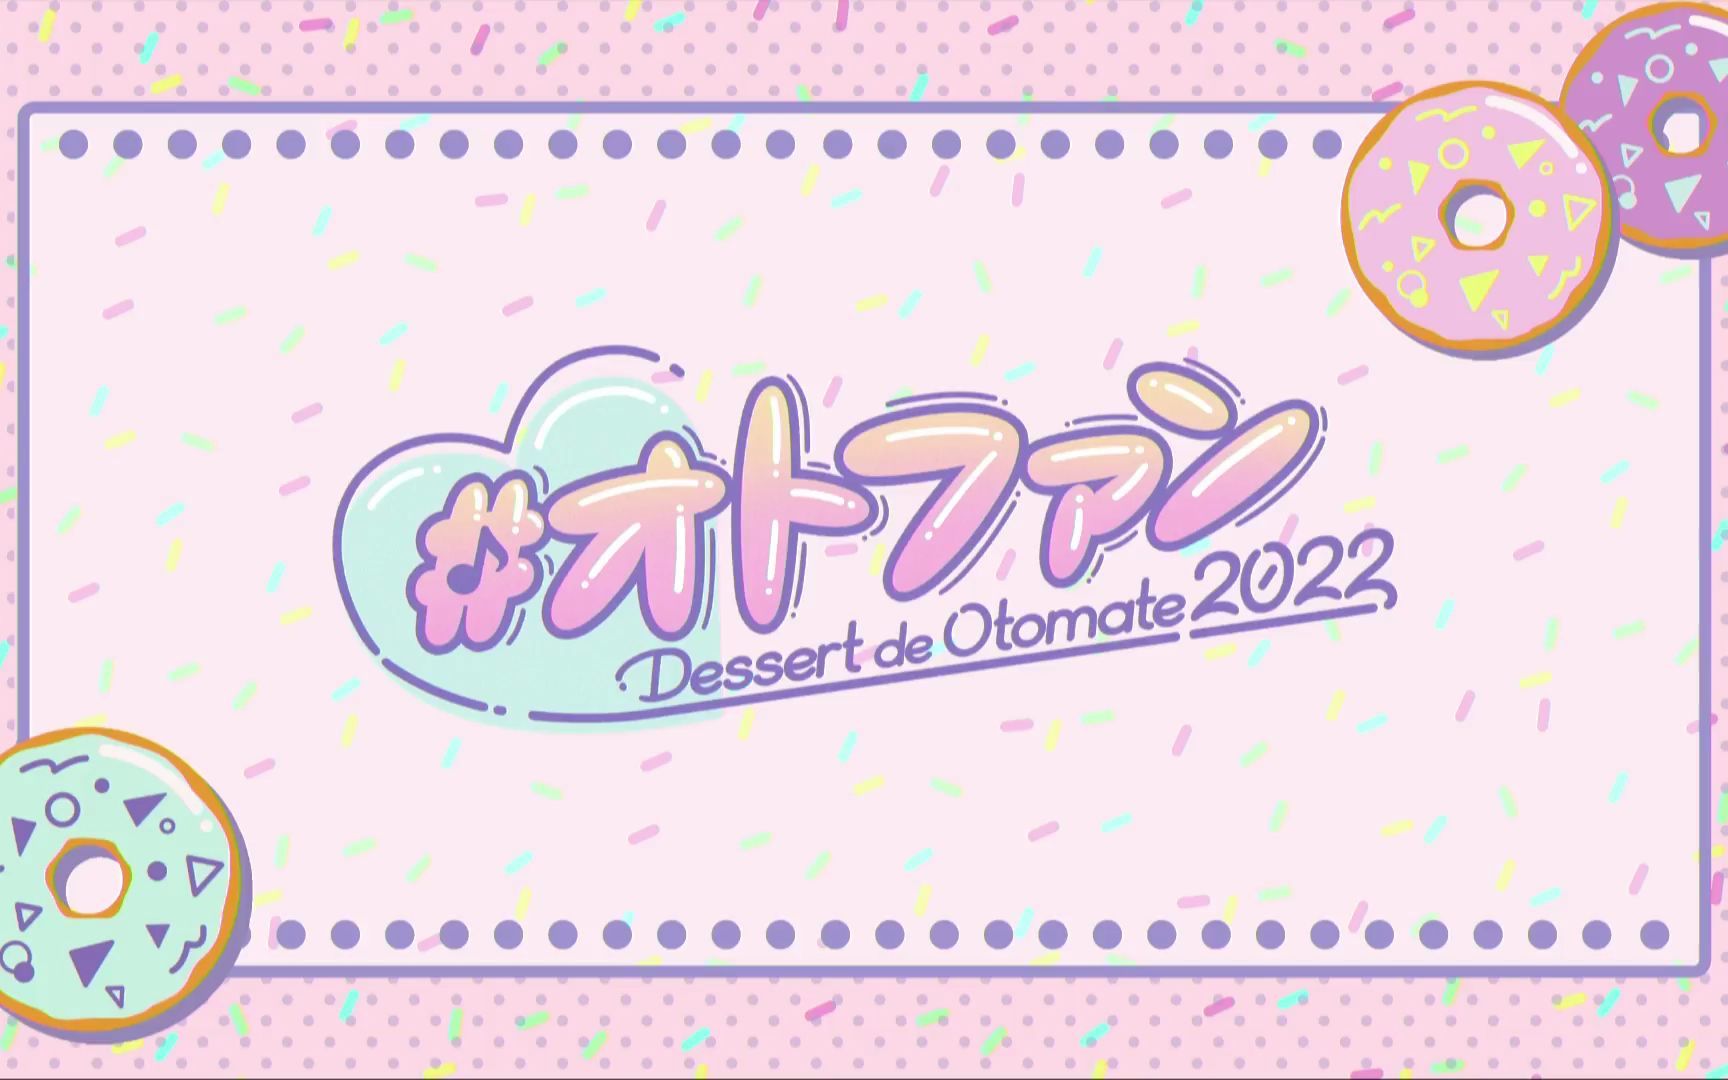 「Dessert de Otomate 2022」昼场